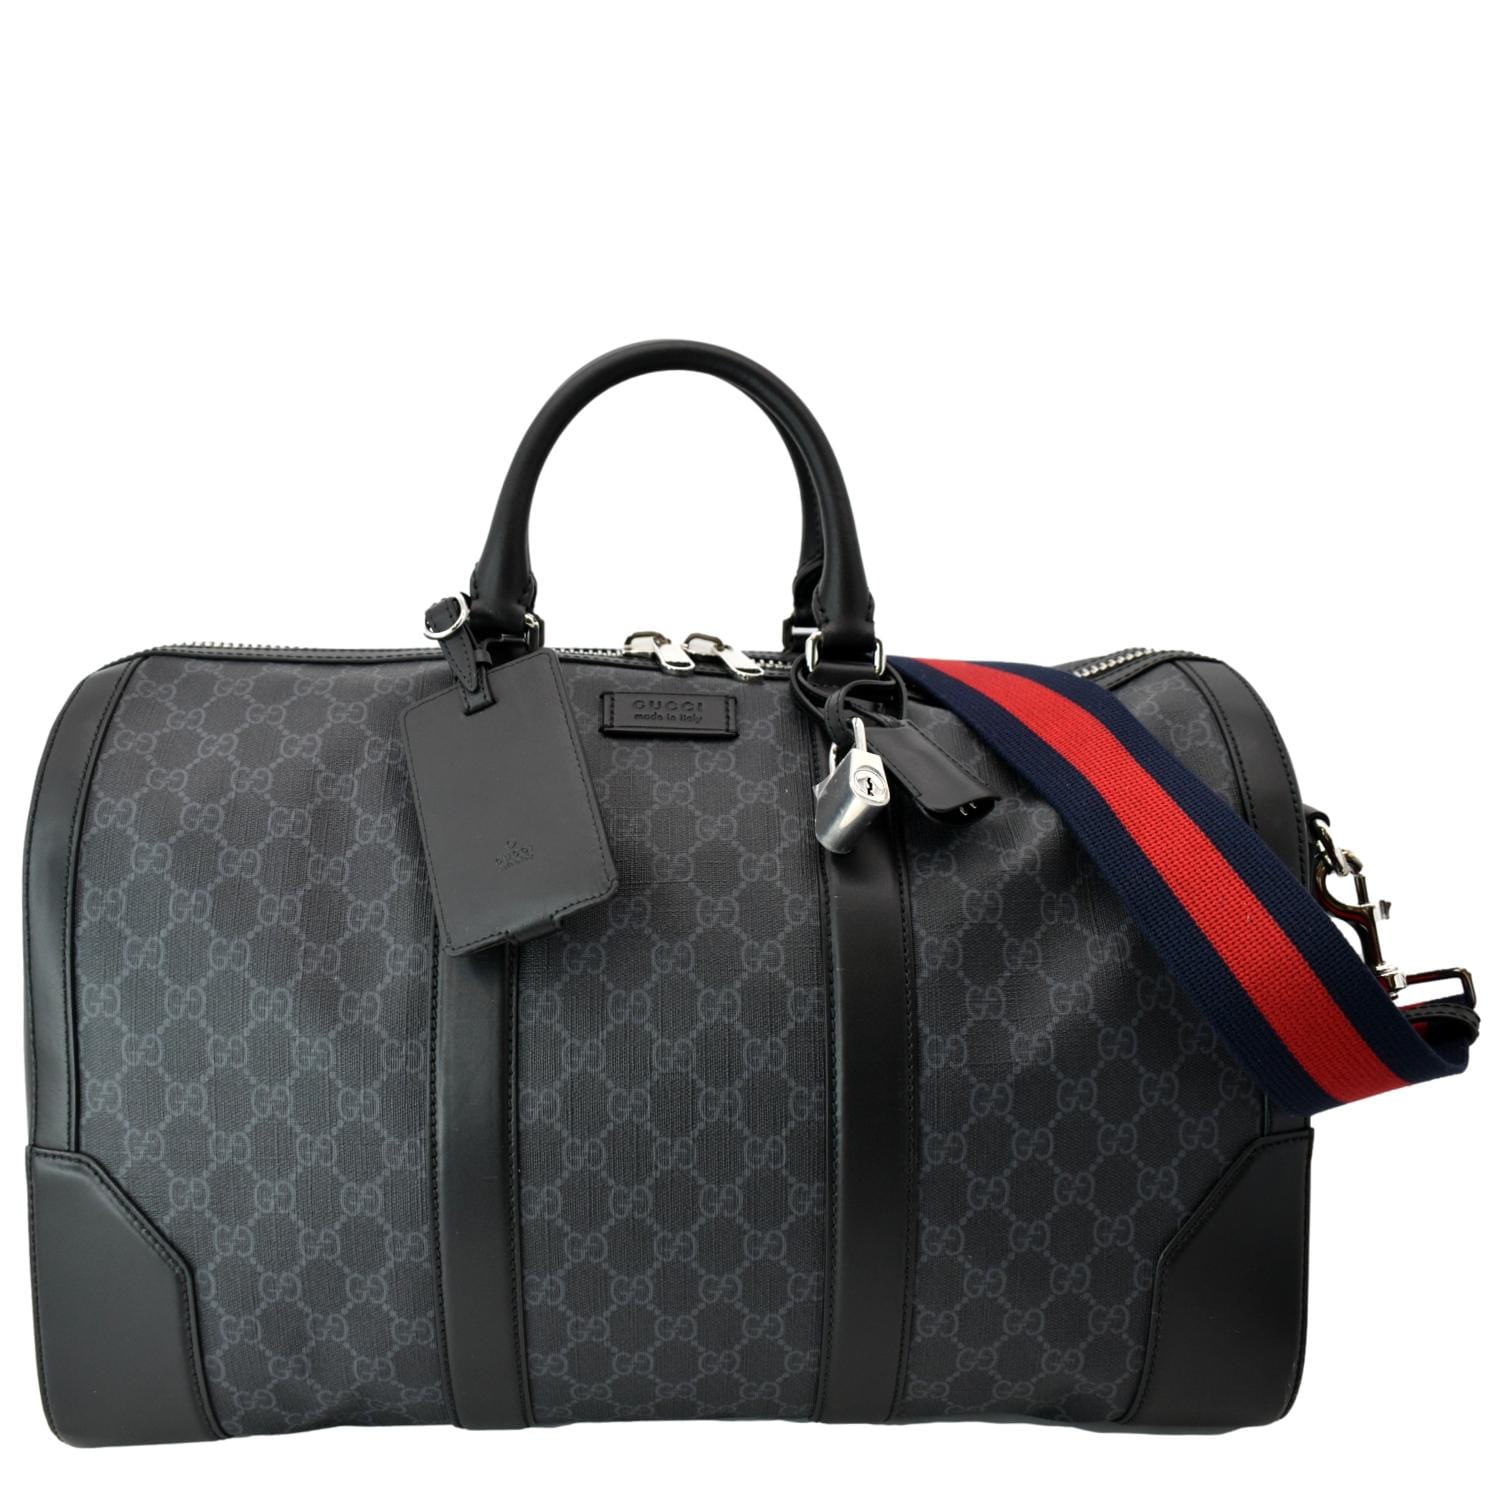 LouissYSLhandbag Men Duffle Bag Women Travel Bags Hand Luggage